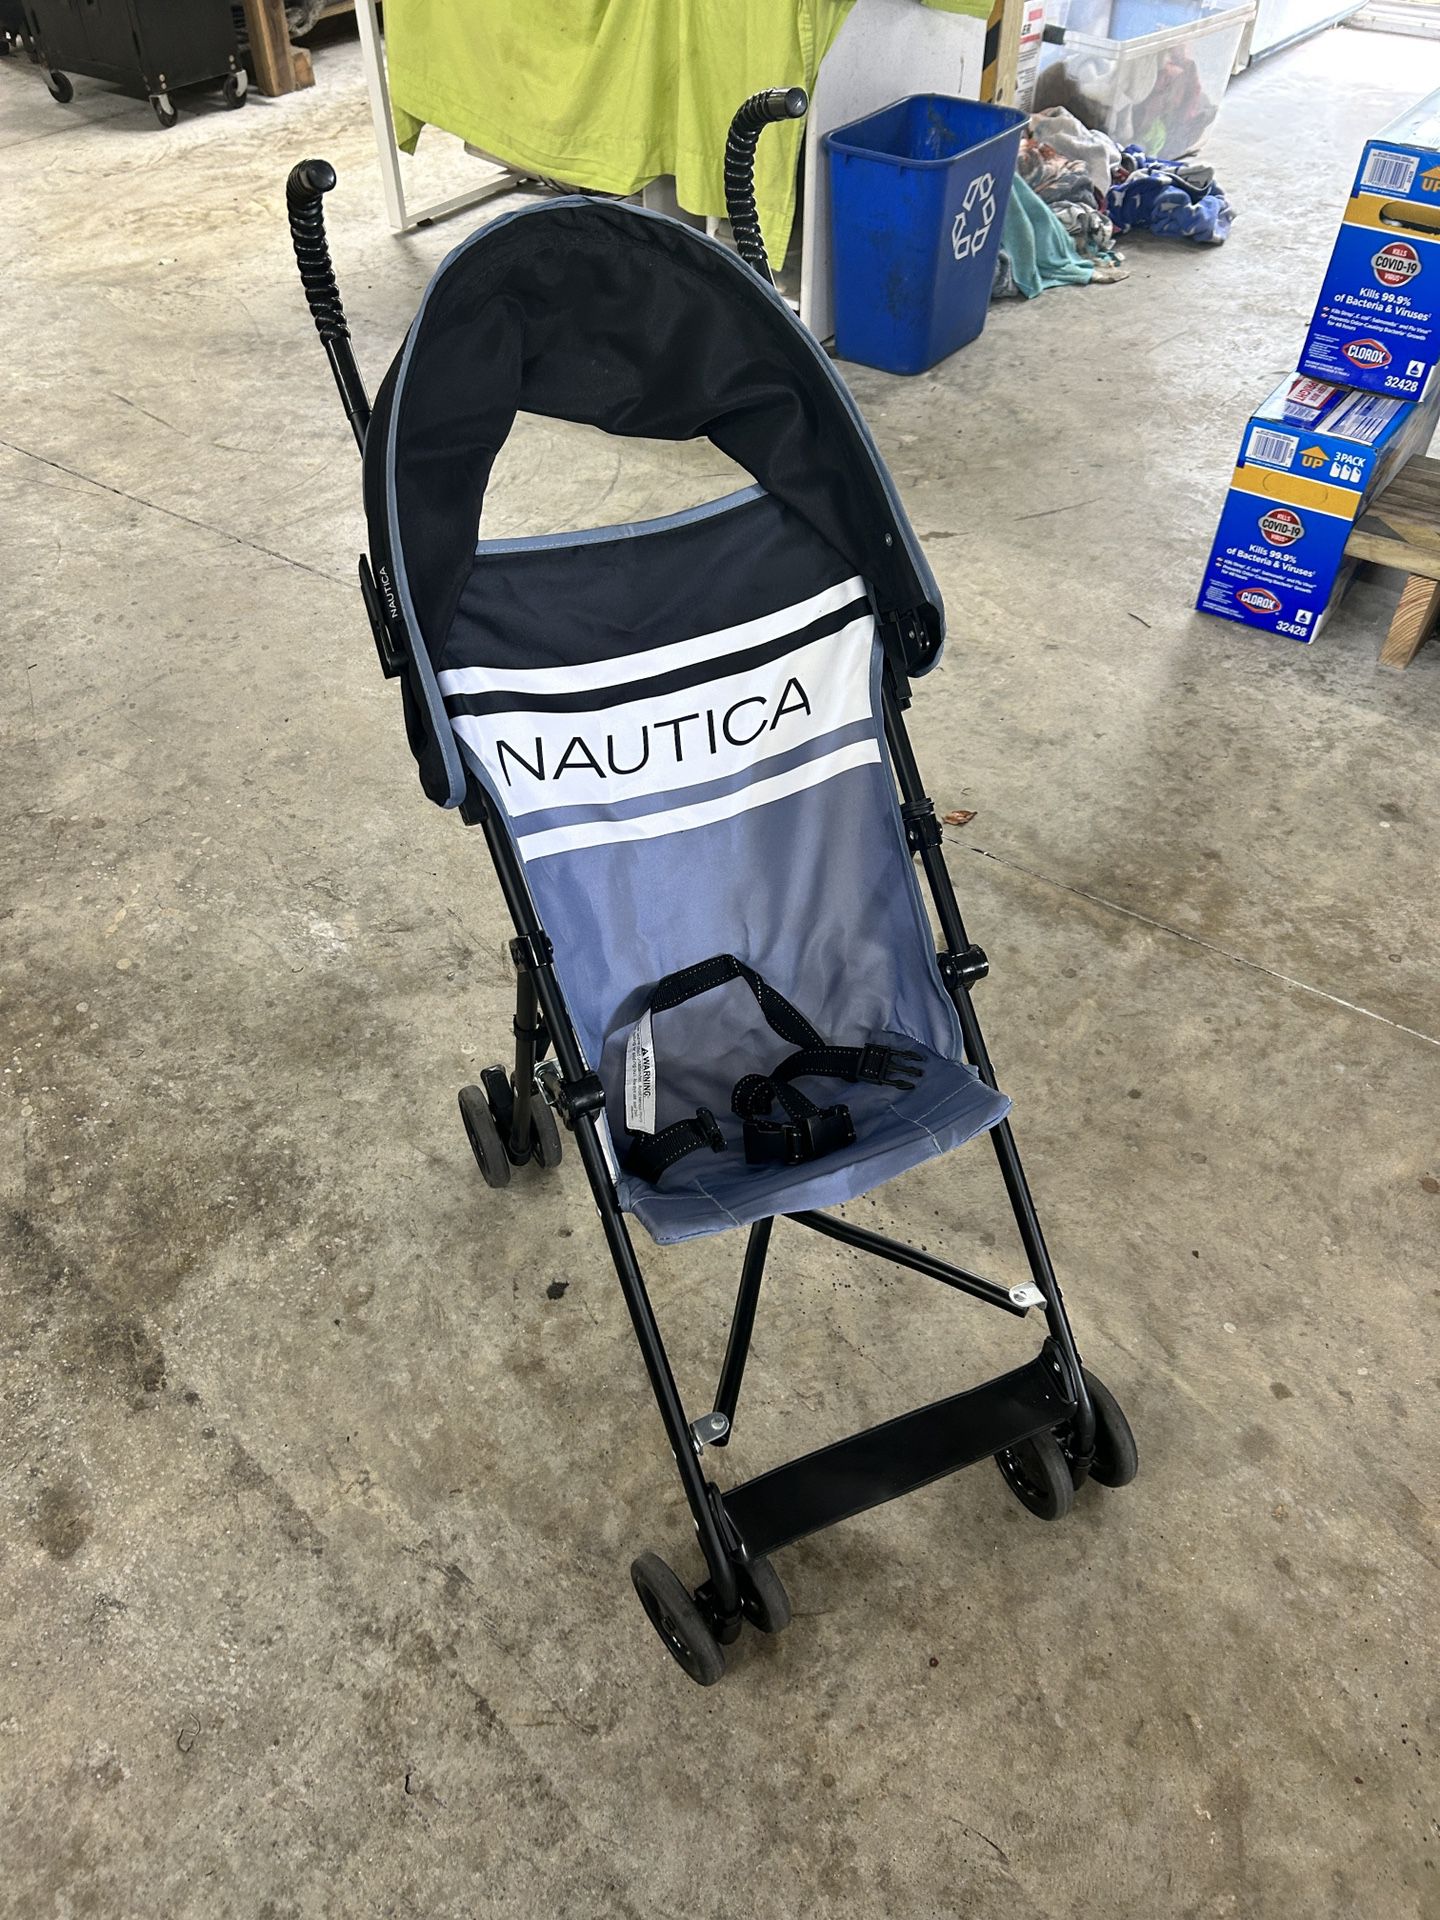 Nautica Baby Stroller